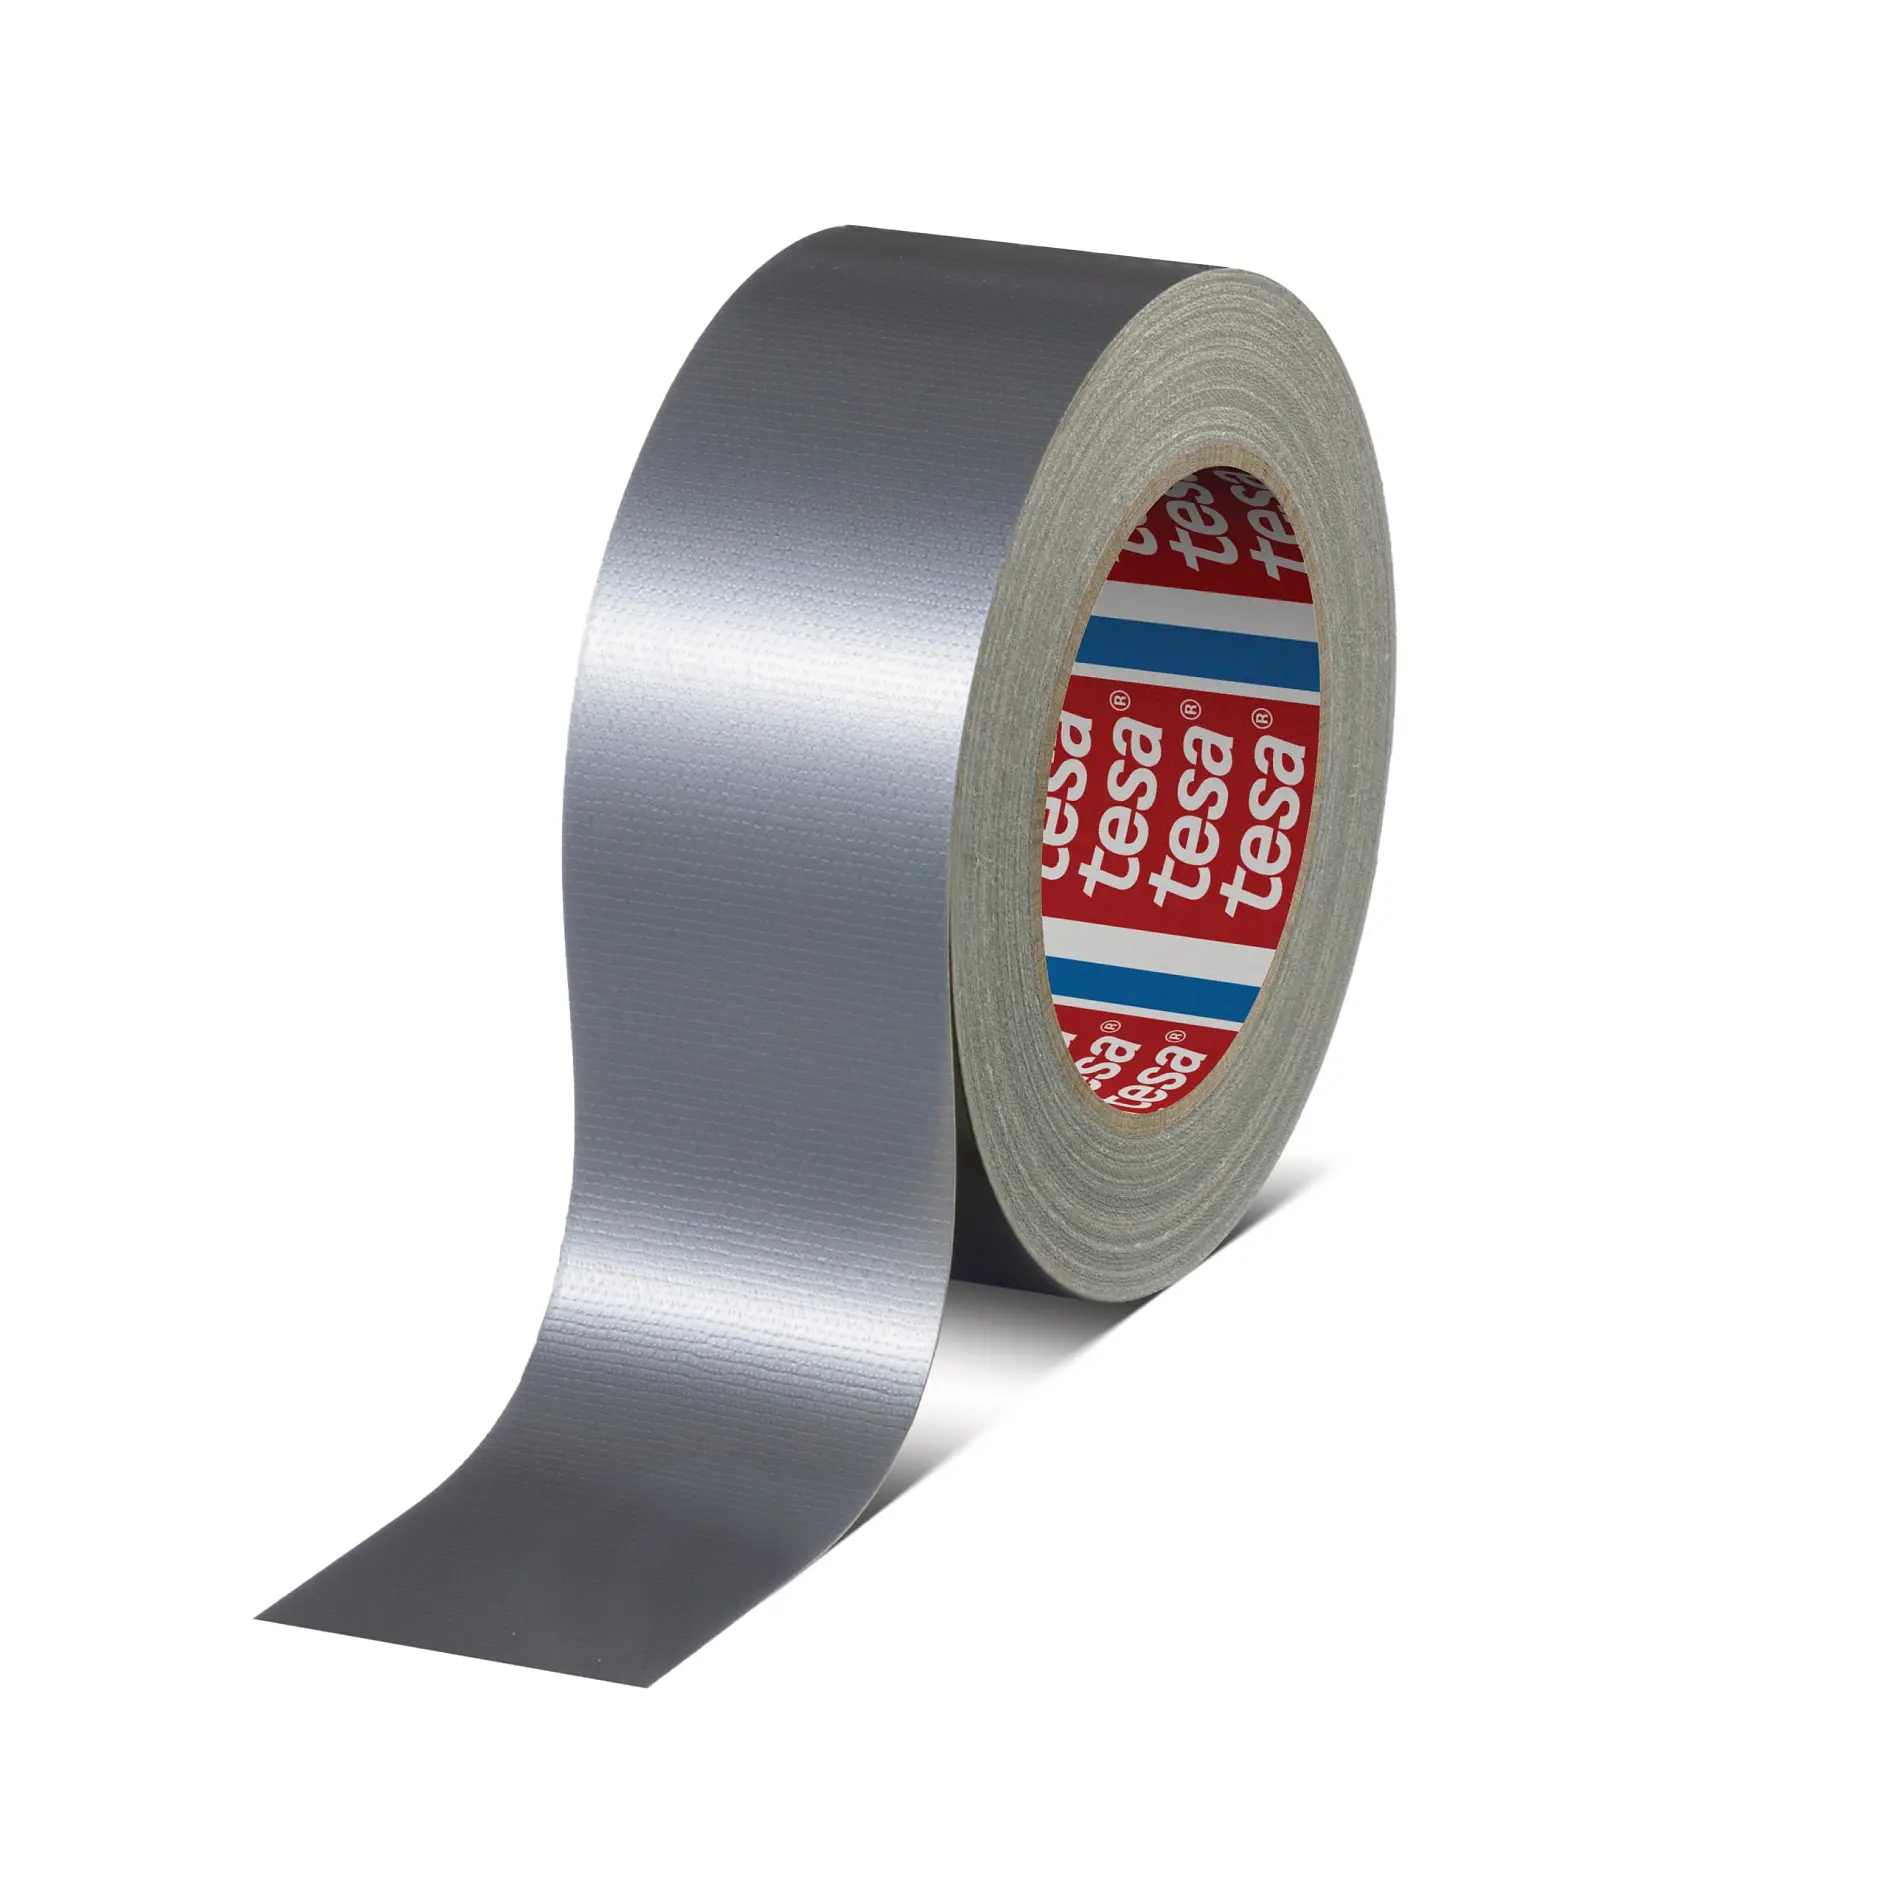 tesa-4687-standard-PE-laminated-cloth-tape-gray-046870002100-pr